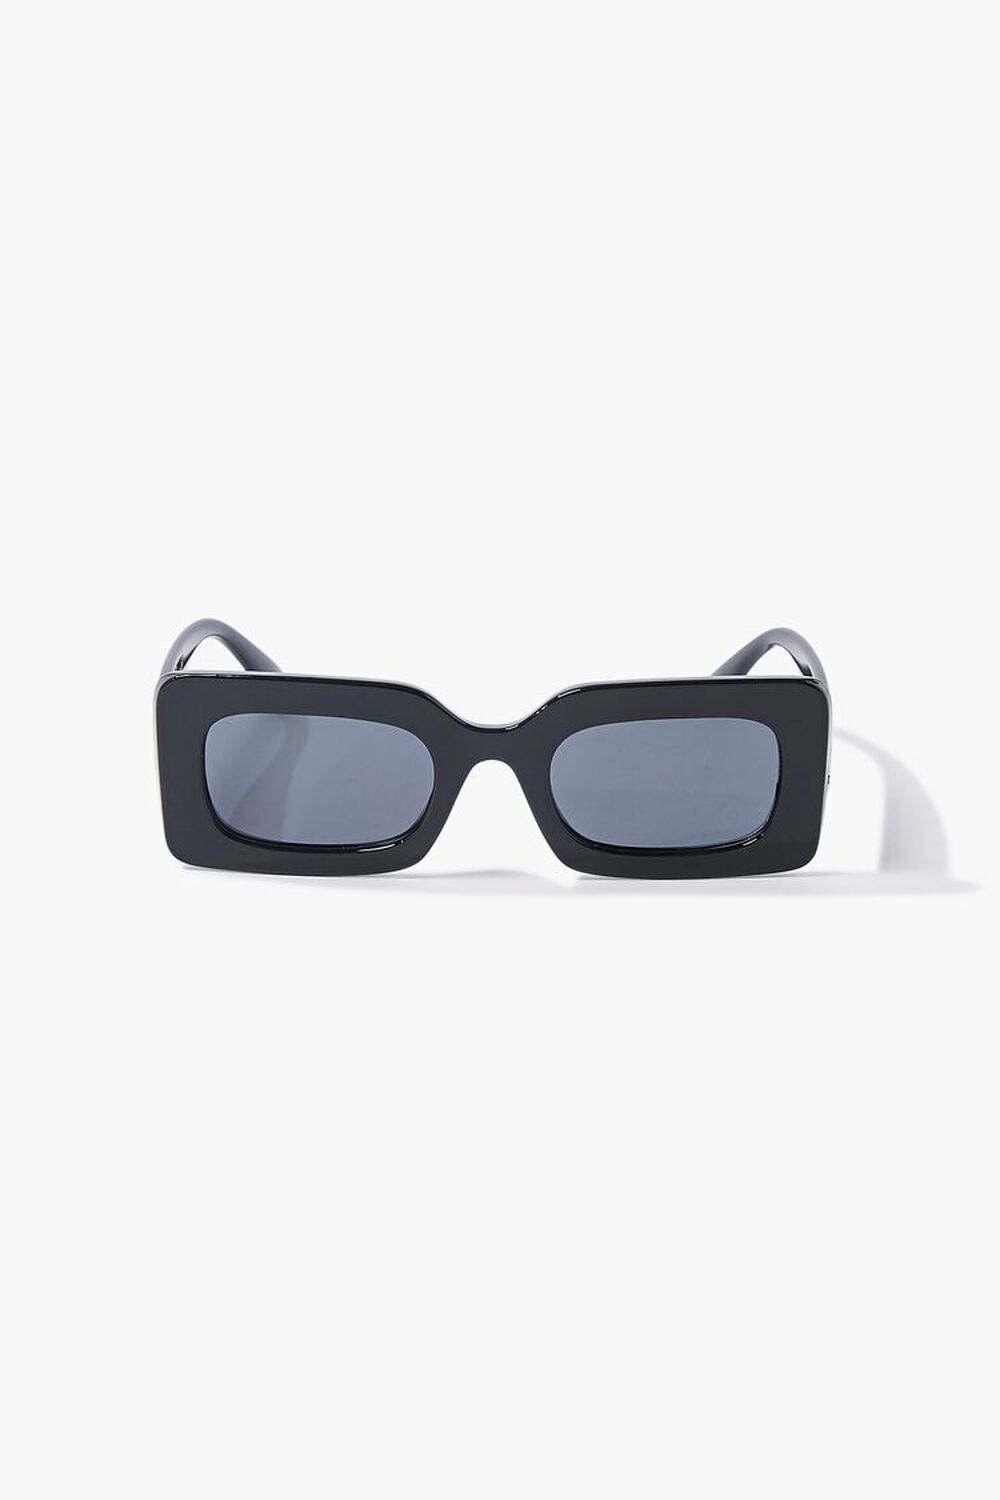 Tortoiseshell Square Sunglasses, image 1